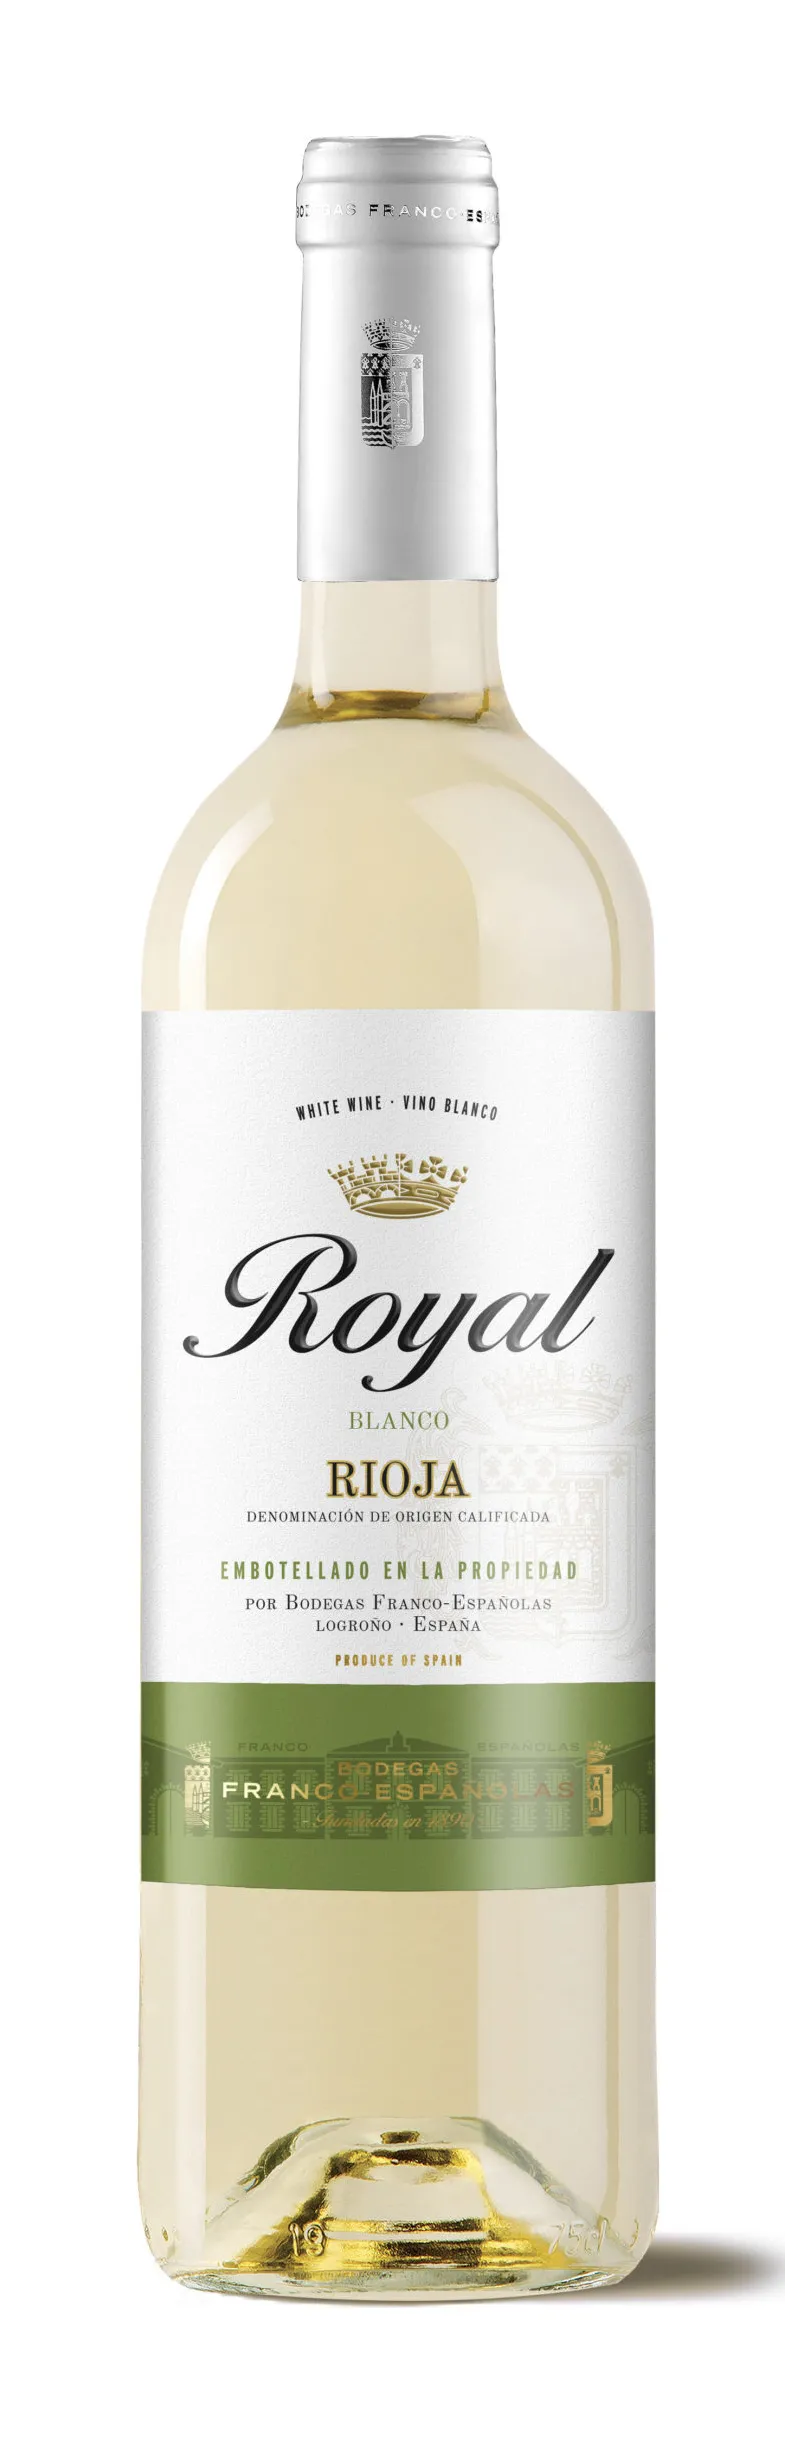 Bottle of Bodegas Franco-Españolas Royal Viura Rioja from search results